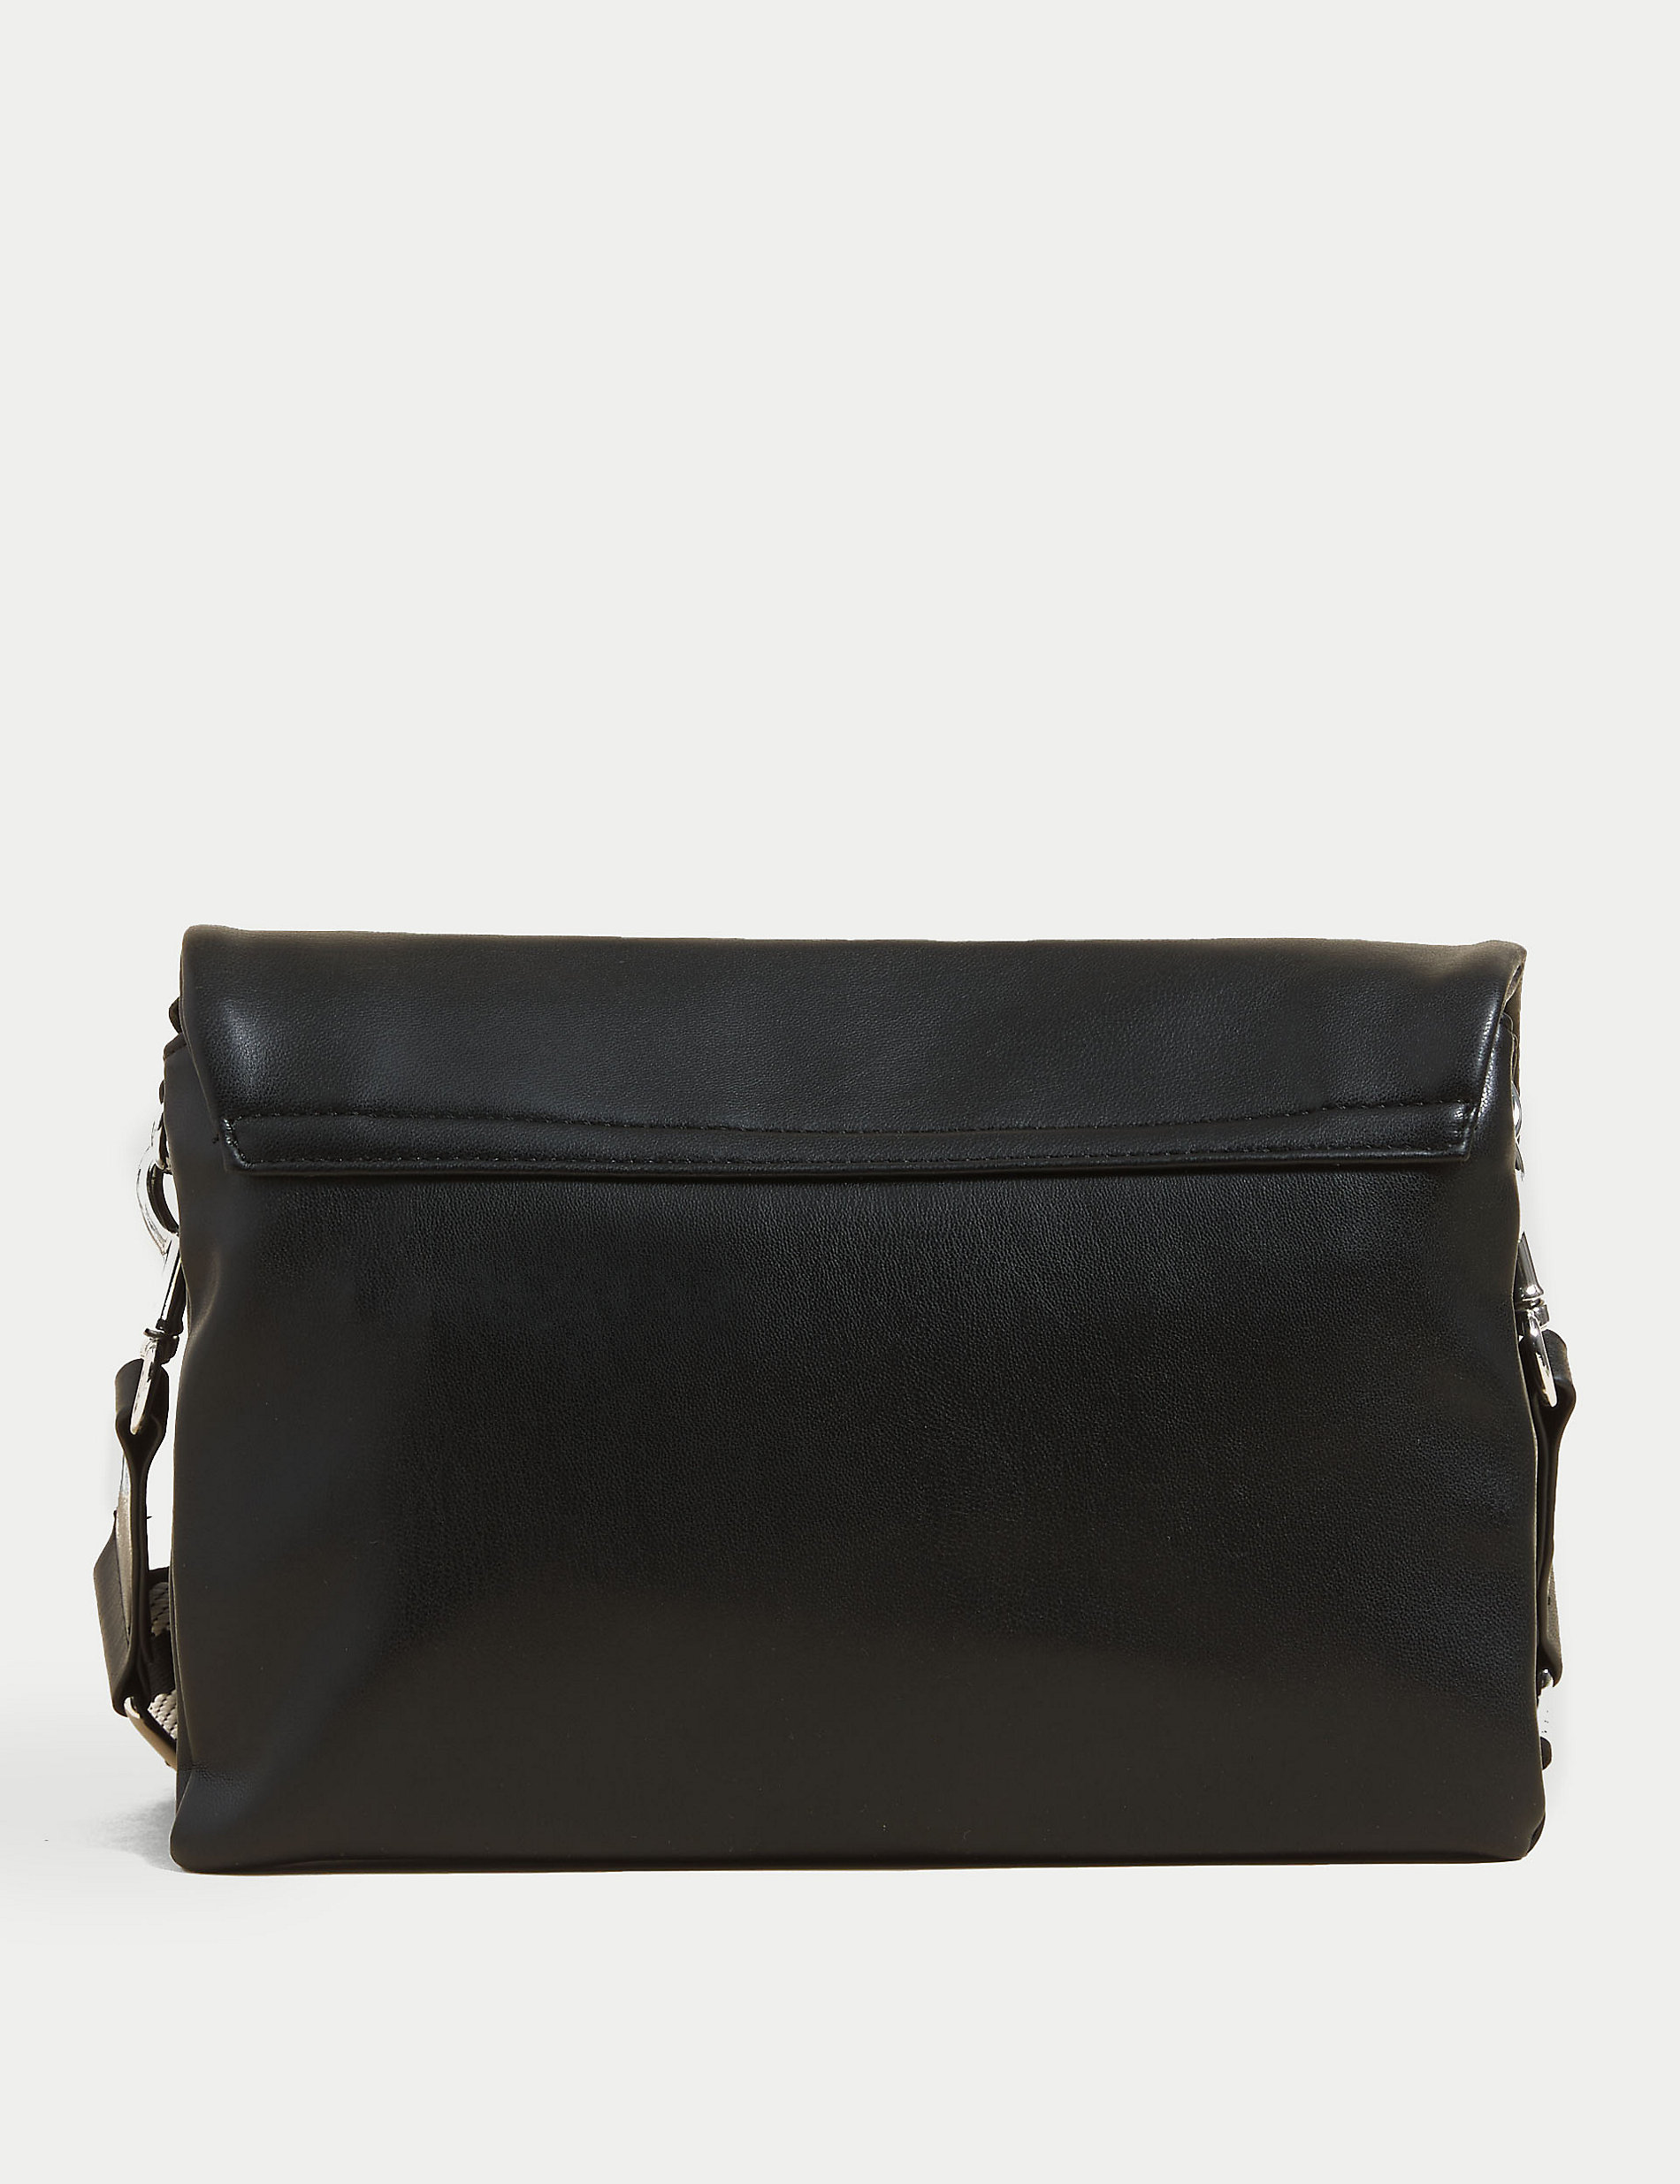 discount 63% Black Single NoName Crossboyd bag WOMEN FASHION Bags Leatherette 